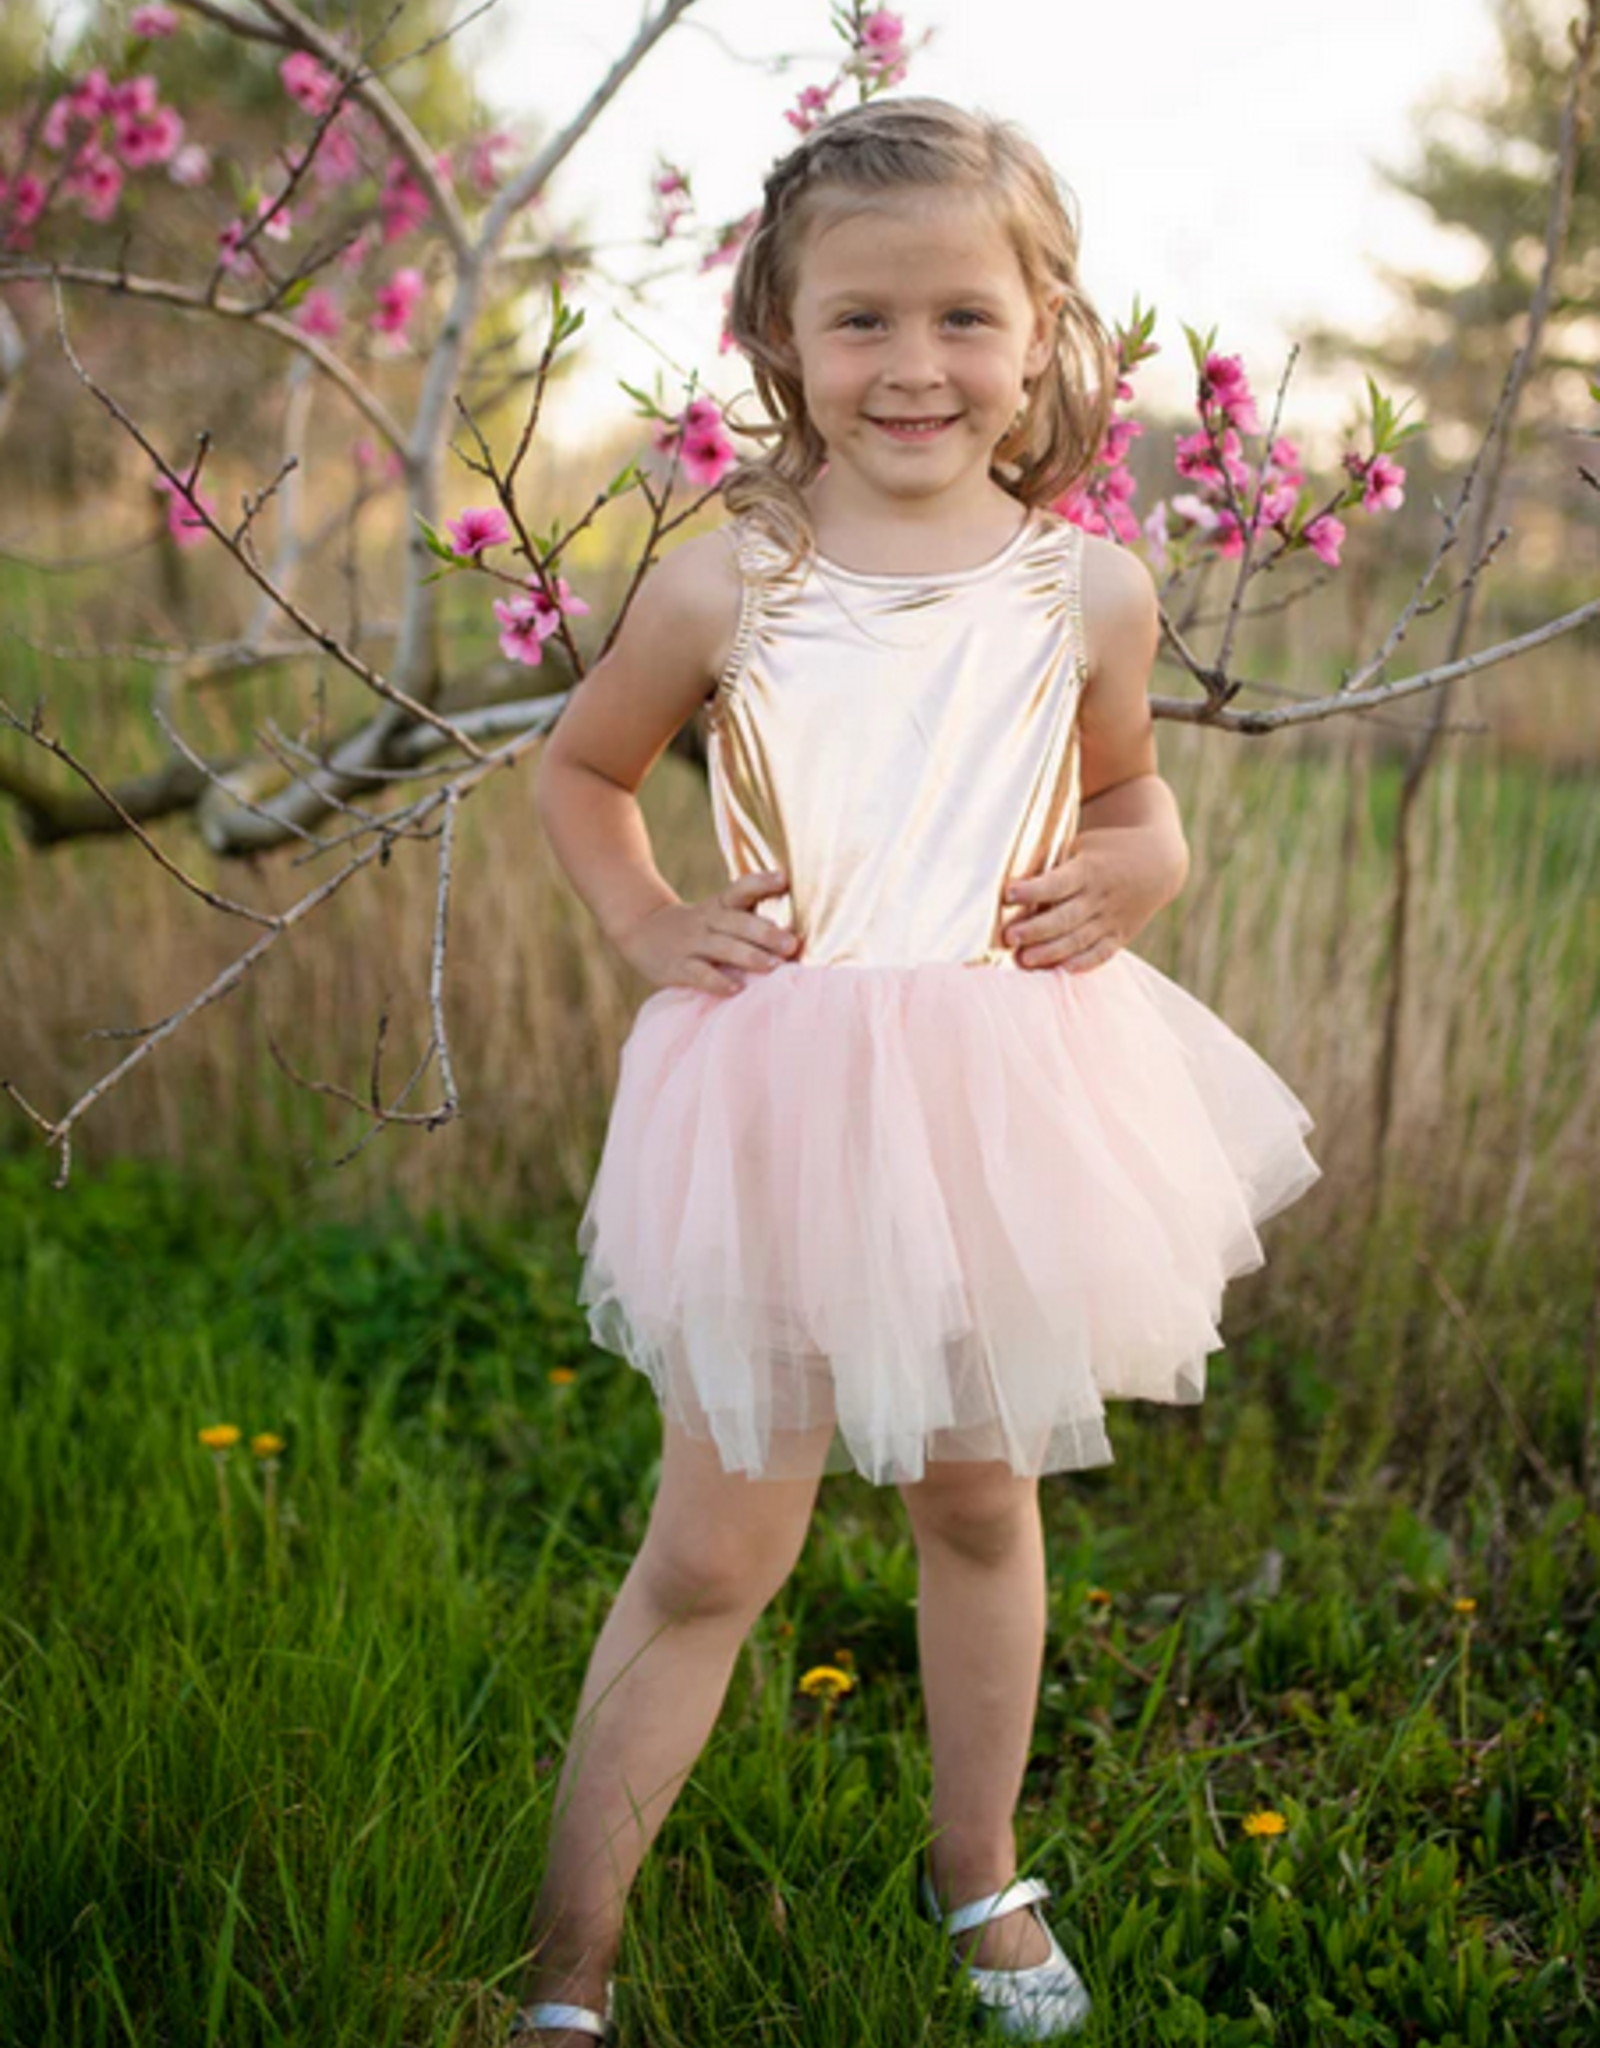 Creative Education Ballet Tutu Dress, Rose Gold, Size 5-6